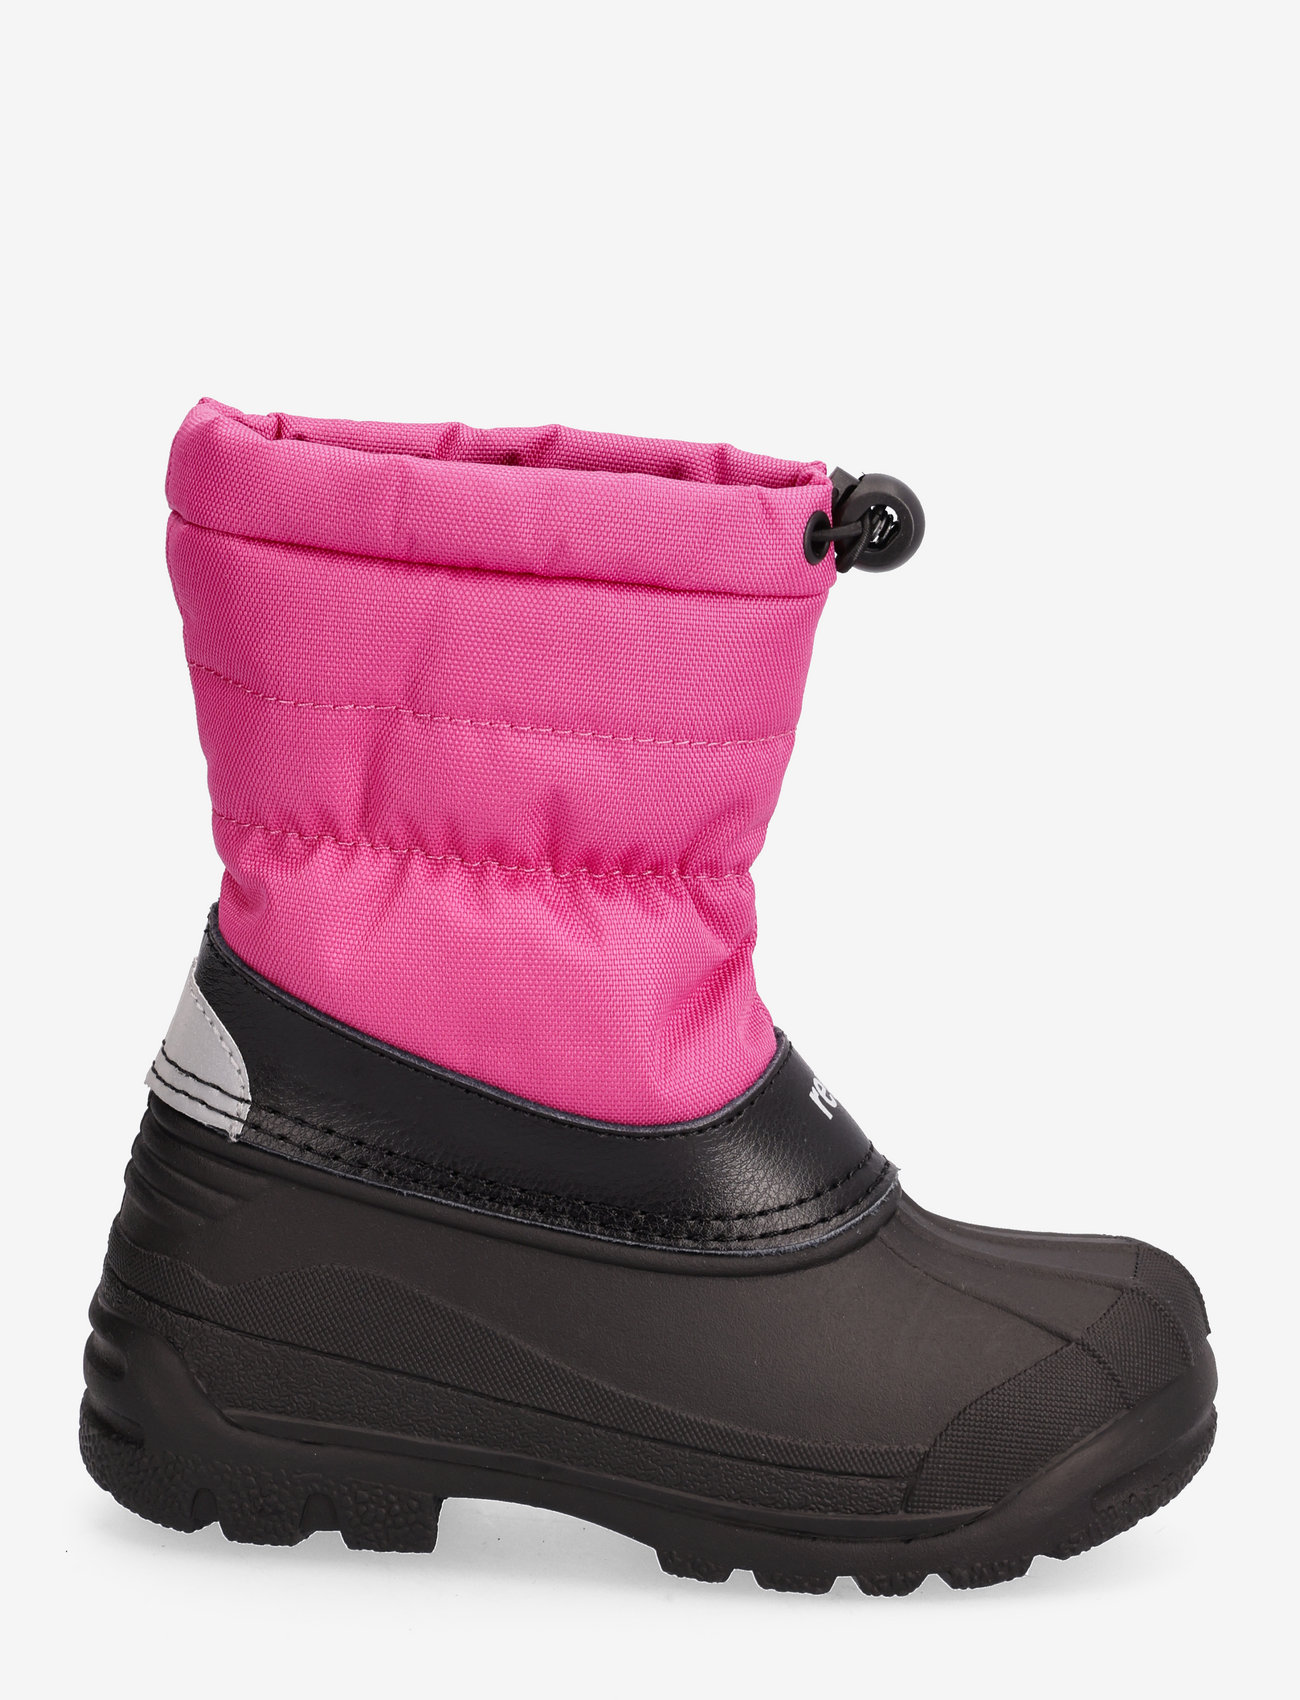 Reima - Winter boots, Nefar - lapset - magenta purple - 1